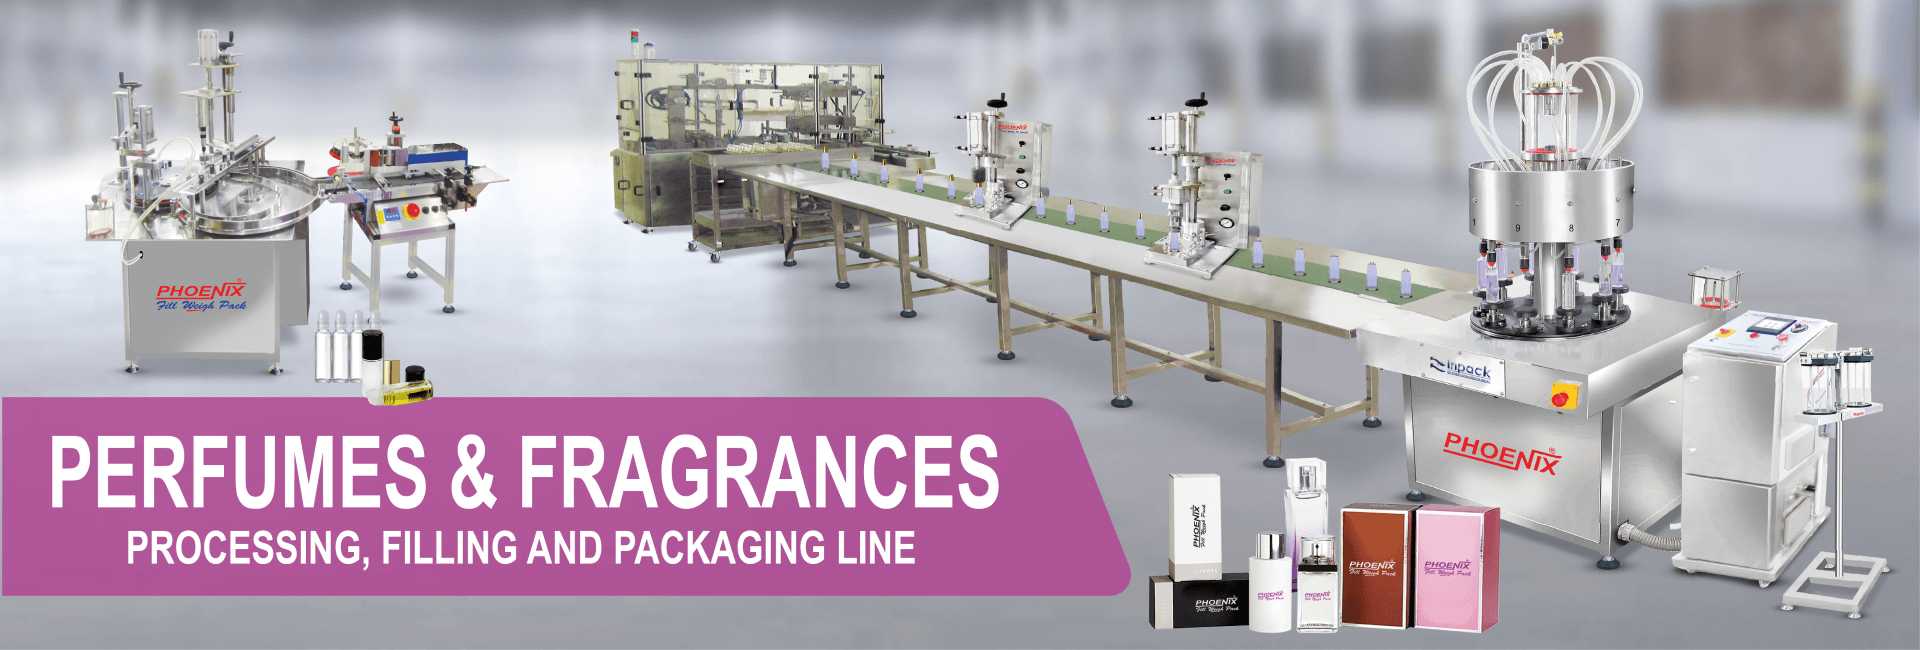 Perfume Filling Machine Manufacturer in Dubai, UAE - Phoenix Dison Tec LLC